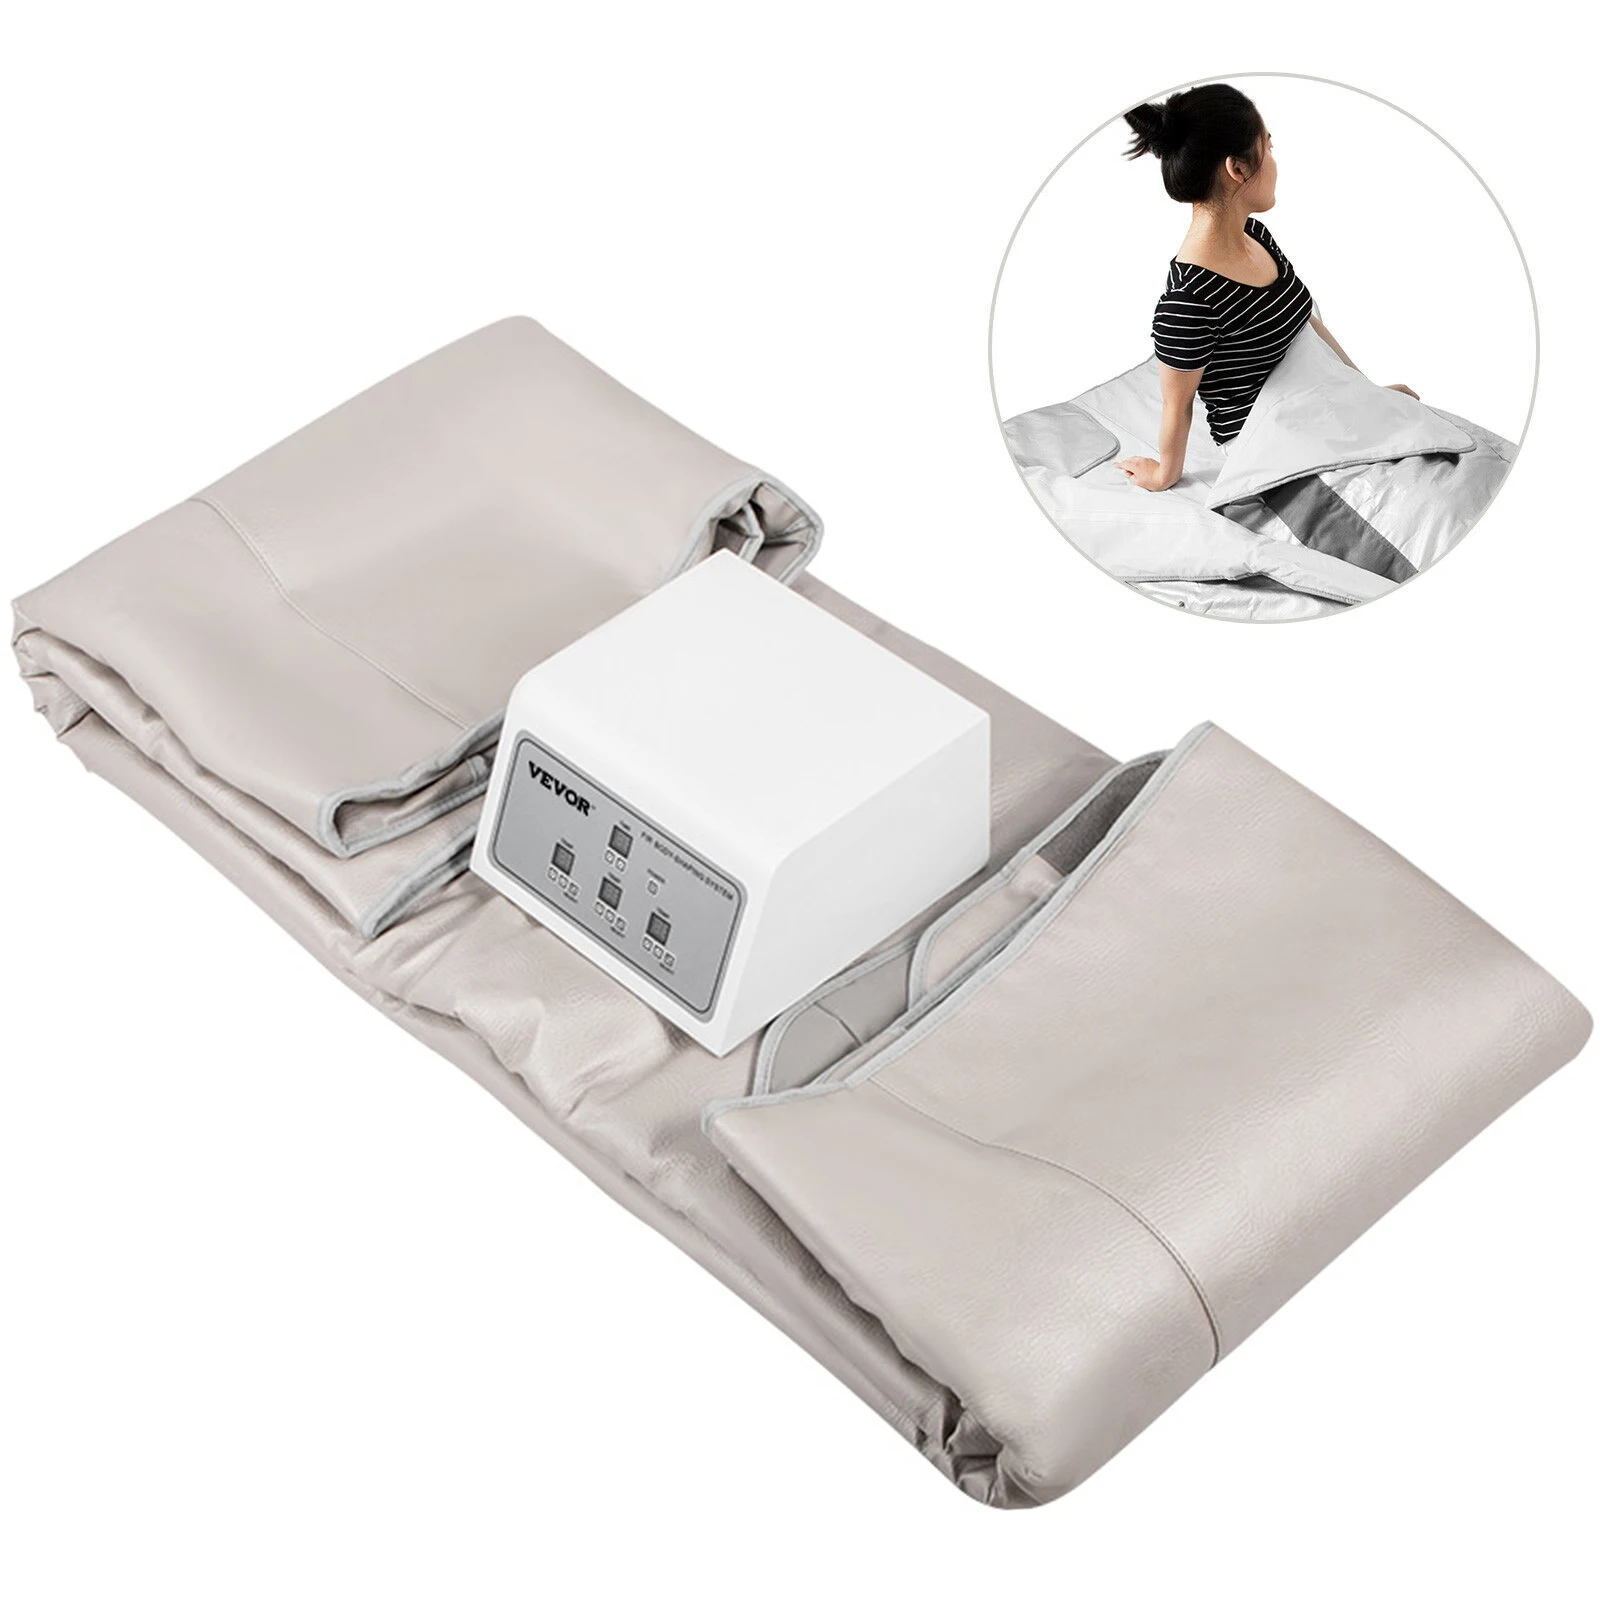 

Far Infrared Sauna Blanket 3 Zone Fat Burning Body Shaping Home Sauna Weight Loss Spa Beauty Detox Therapy Machine Warm Blanket